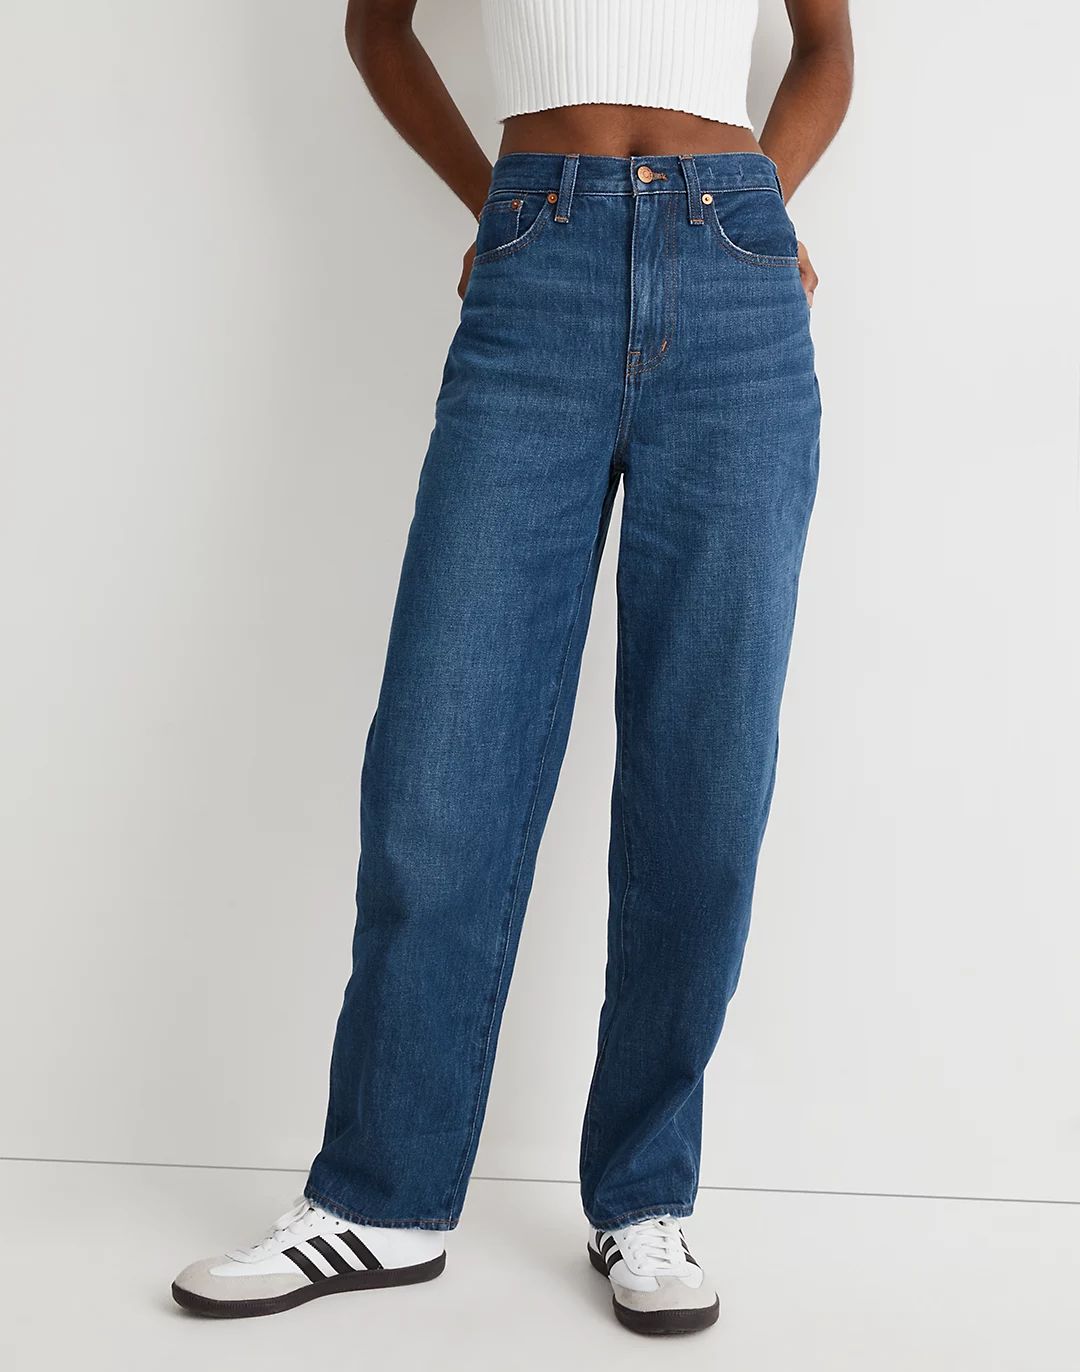 Baggy Straight Jeans in Dark Worn Indigo Wash | Madewell